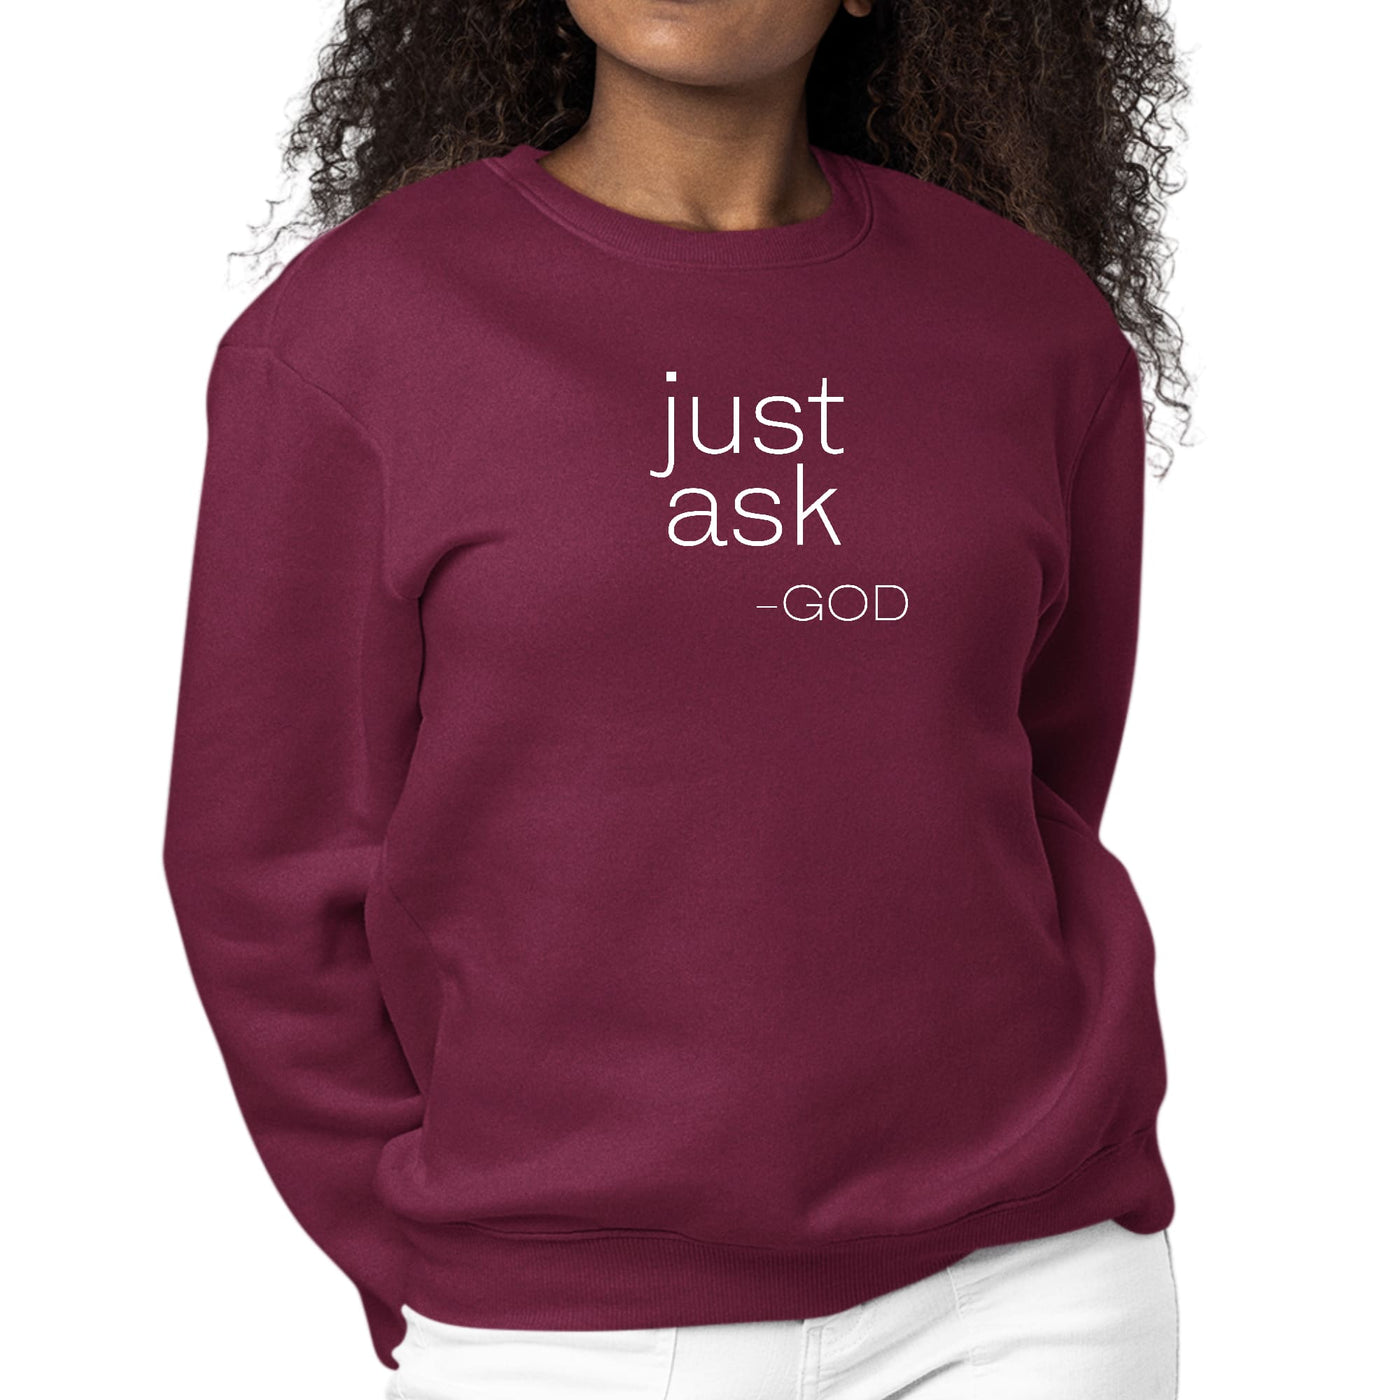 Womens Graphic Sweatshirt Say It Soul ’just Ask-god’ Statement Shirt